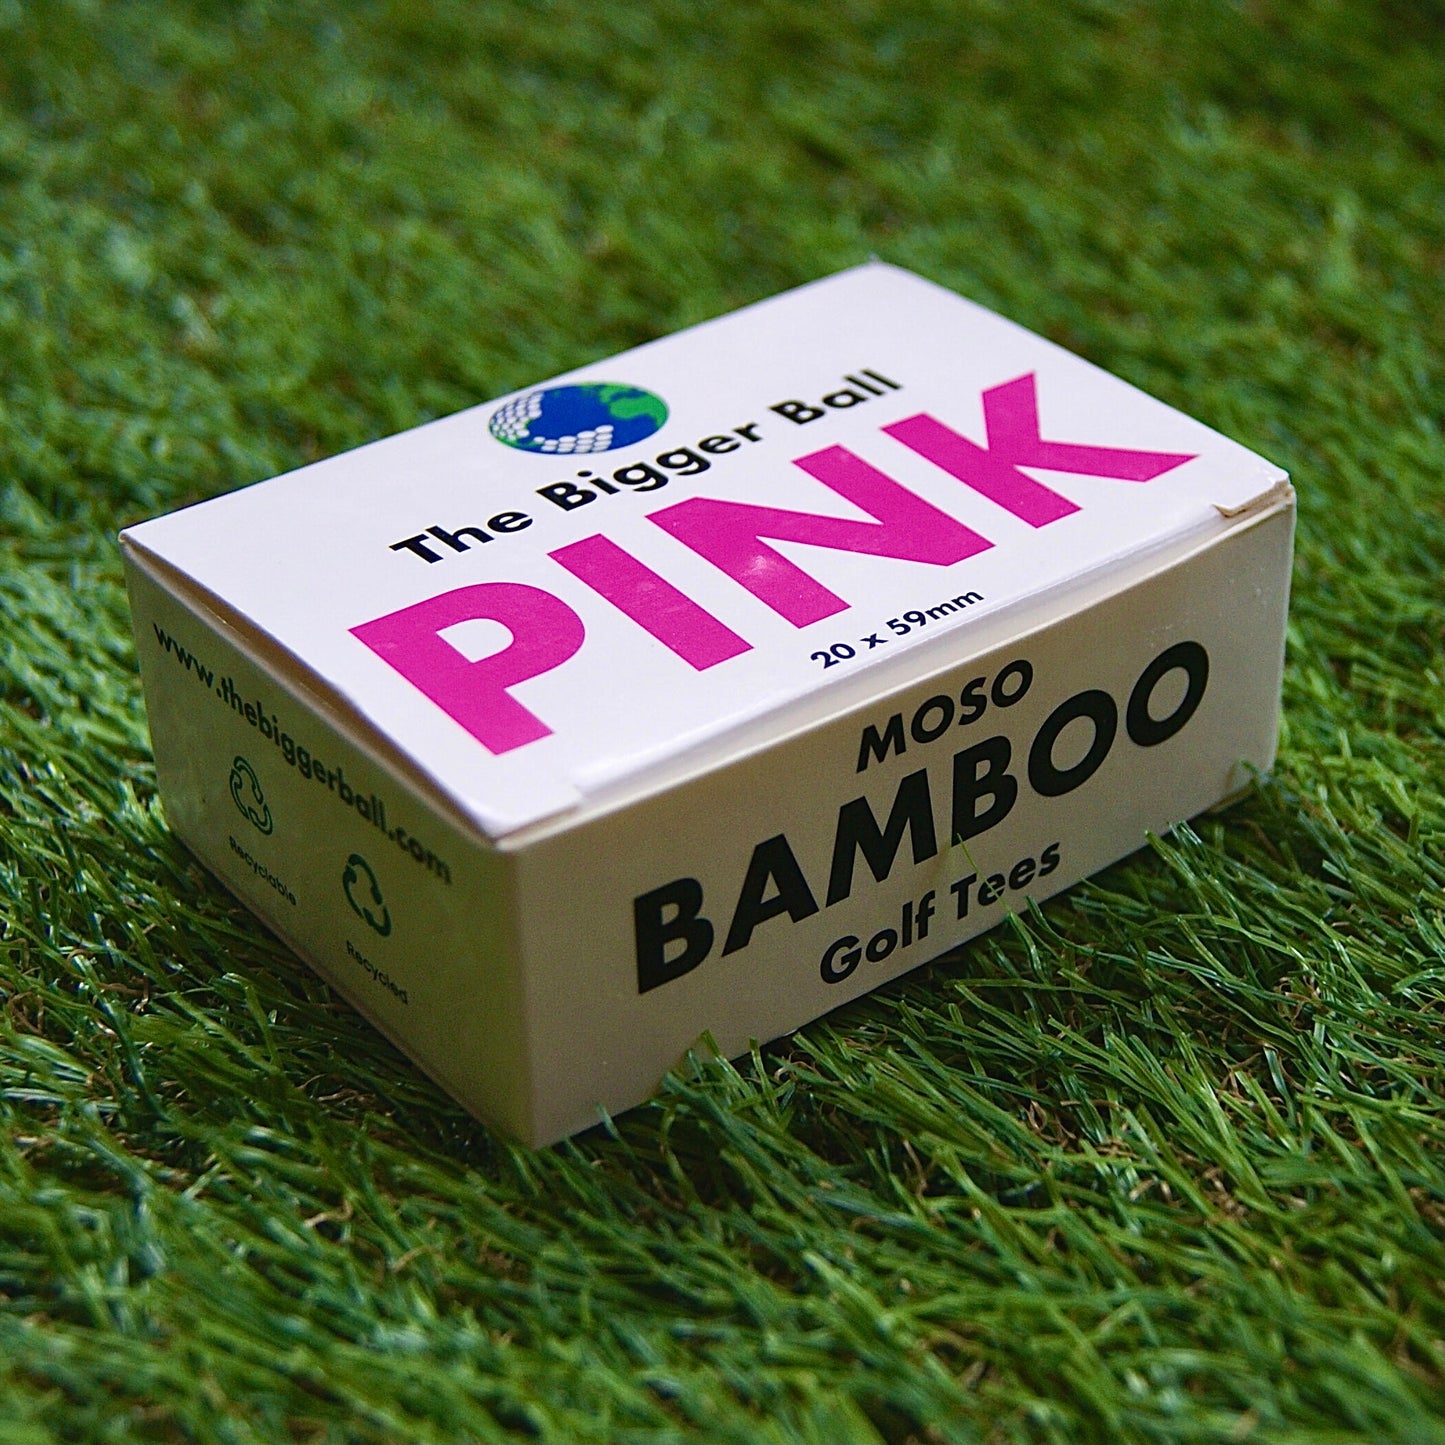 Bamboo Golf Tees